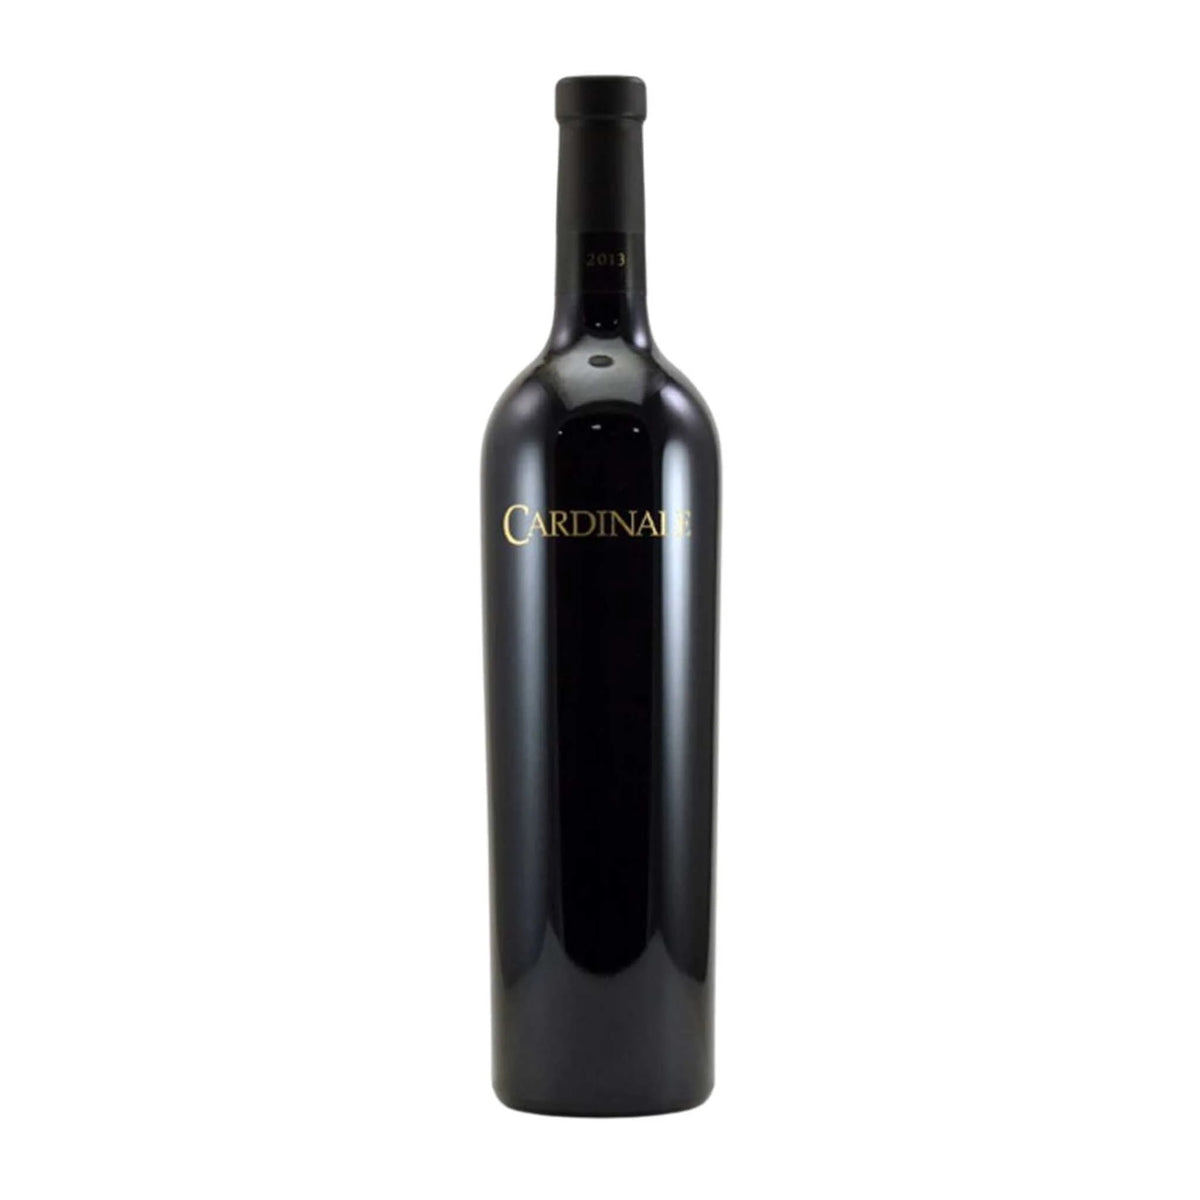 Cardinale-Rotwein-Cabernet Sauvignon, Merlot-2018 Proprietary Red Wine-WINECOM